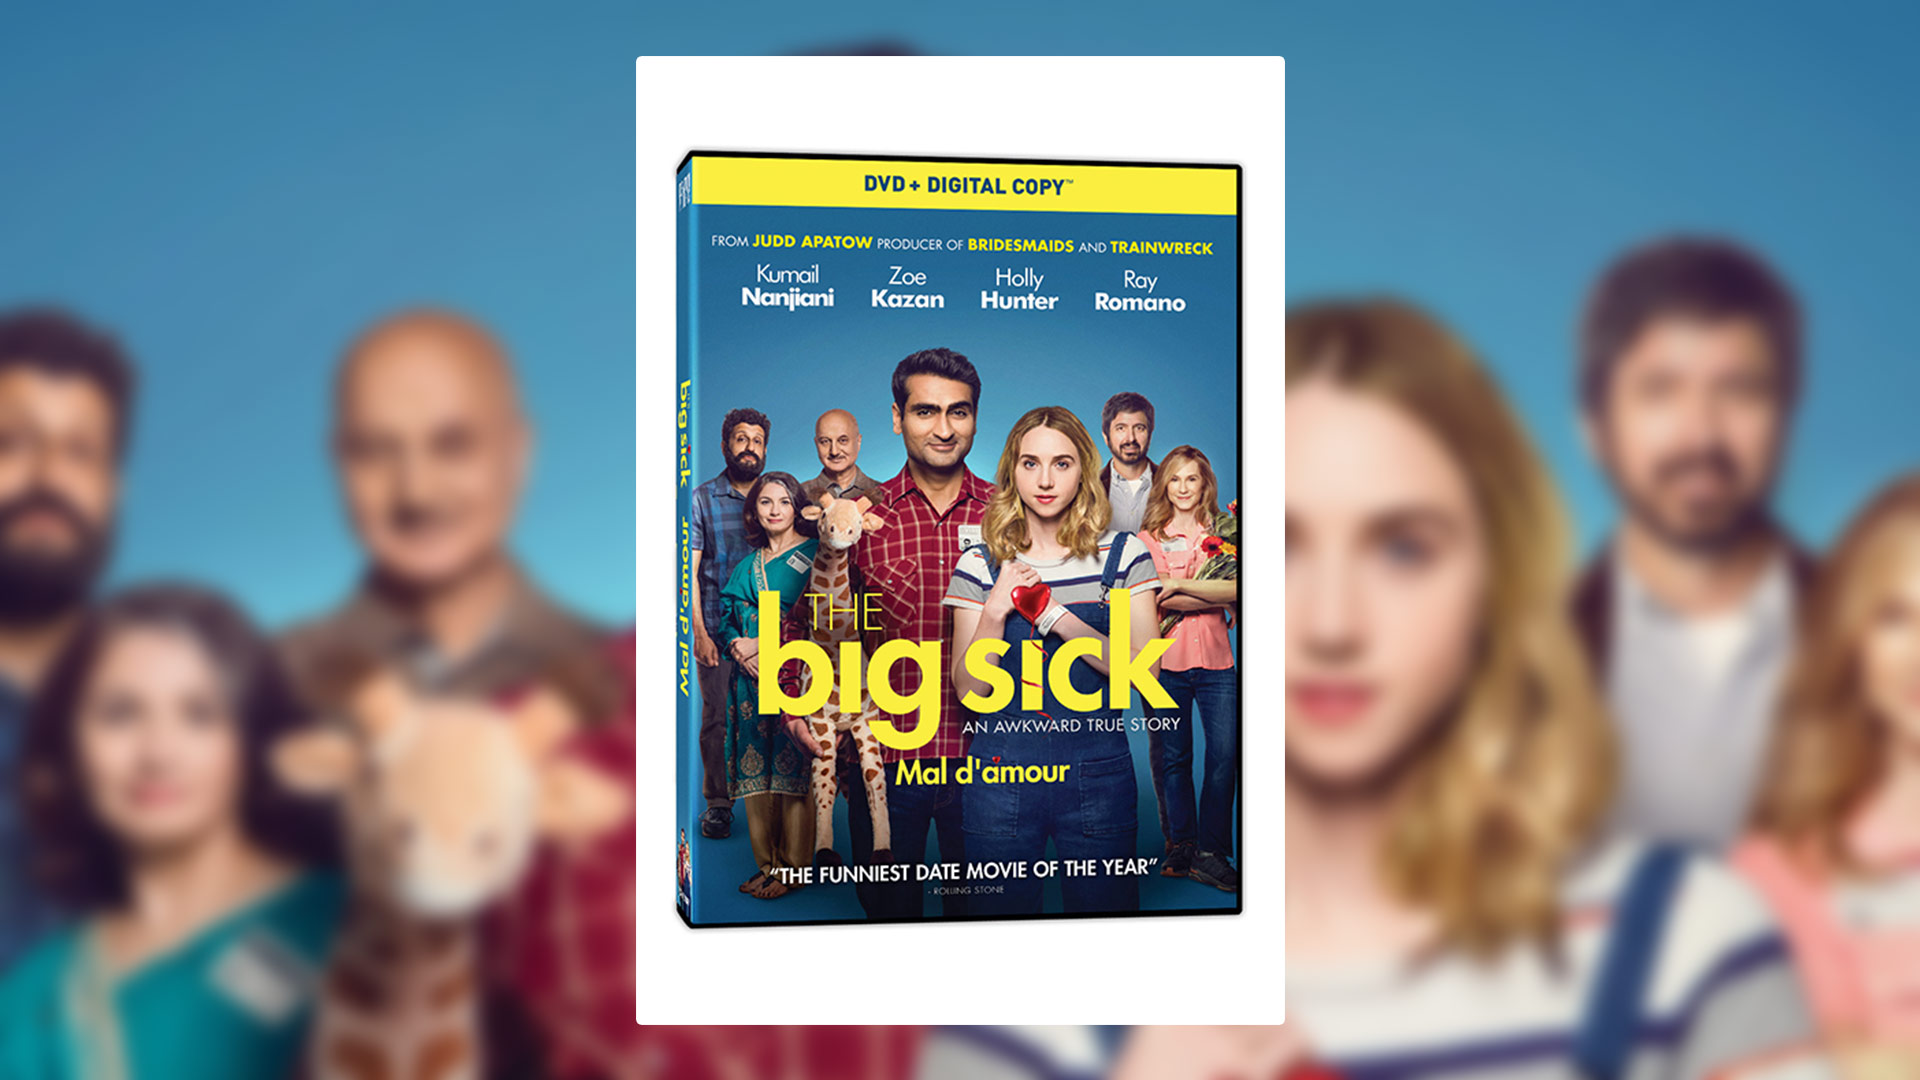 The Big Sick - DVD